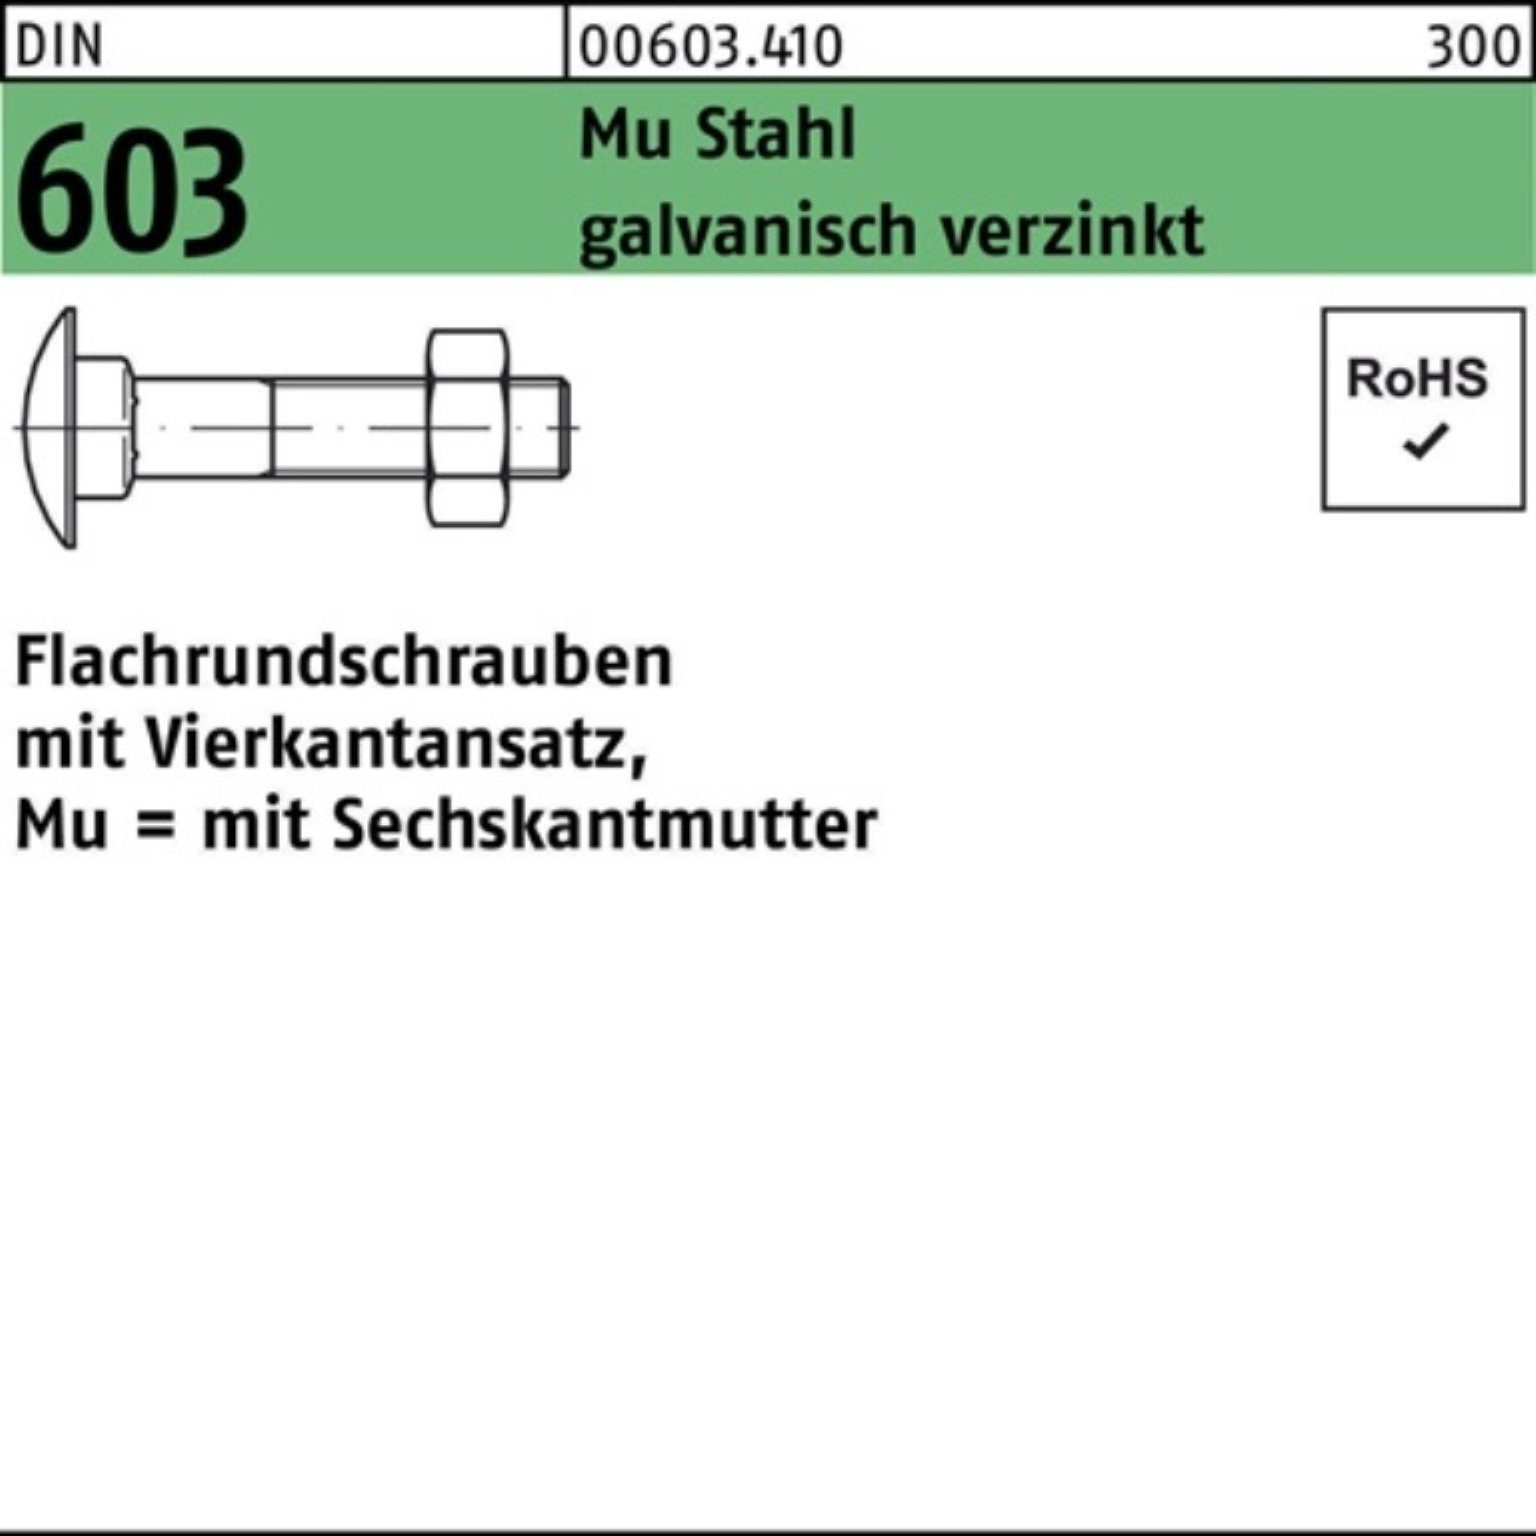 Pack Flachrundschraube Schraube Vierkantansatz/6-ktmutter Reyher 603 M16x160 100er DIN